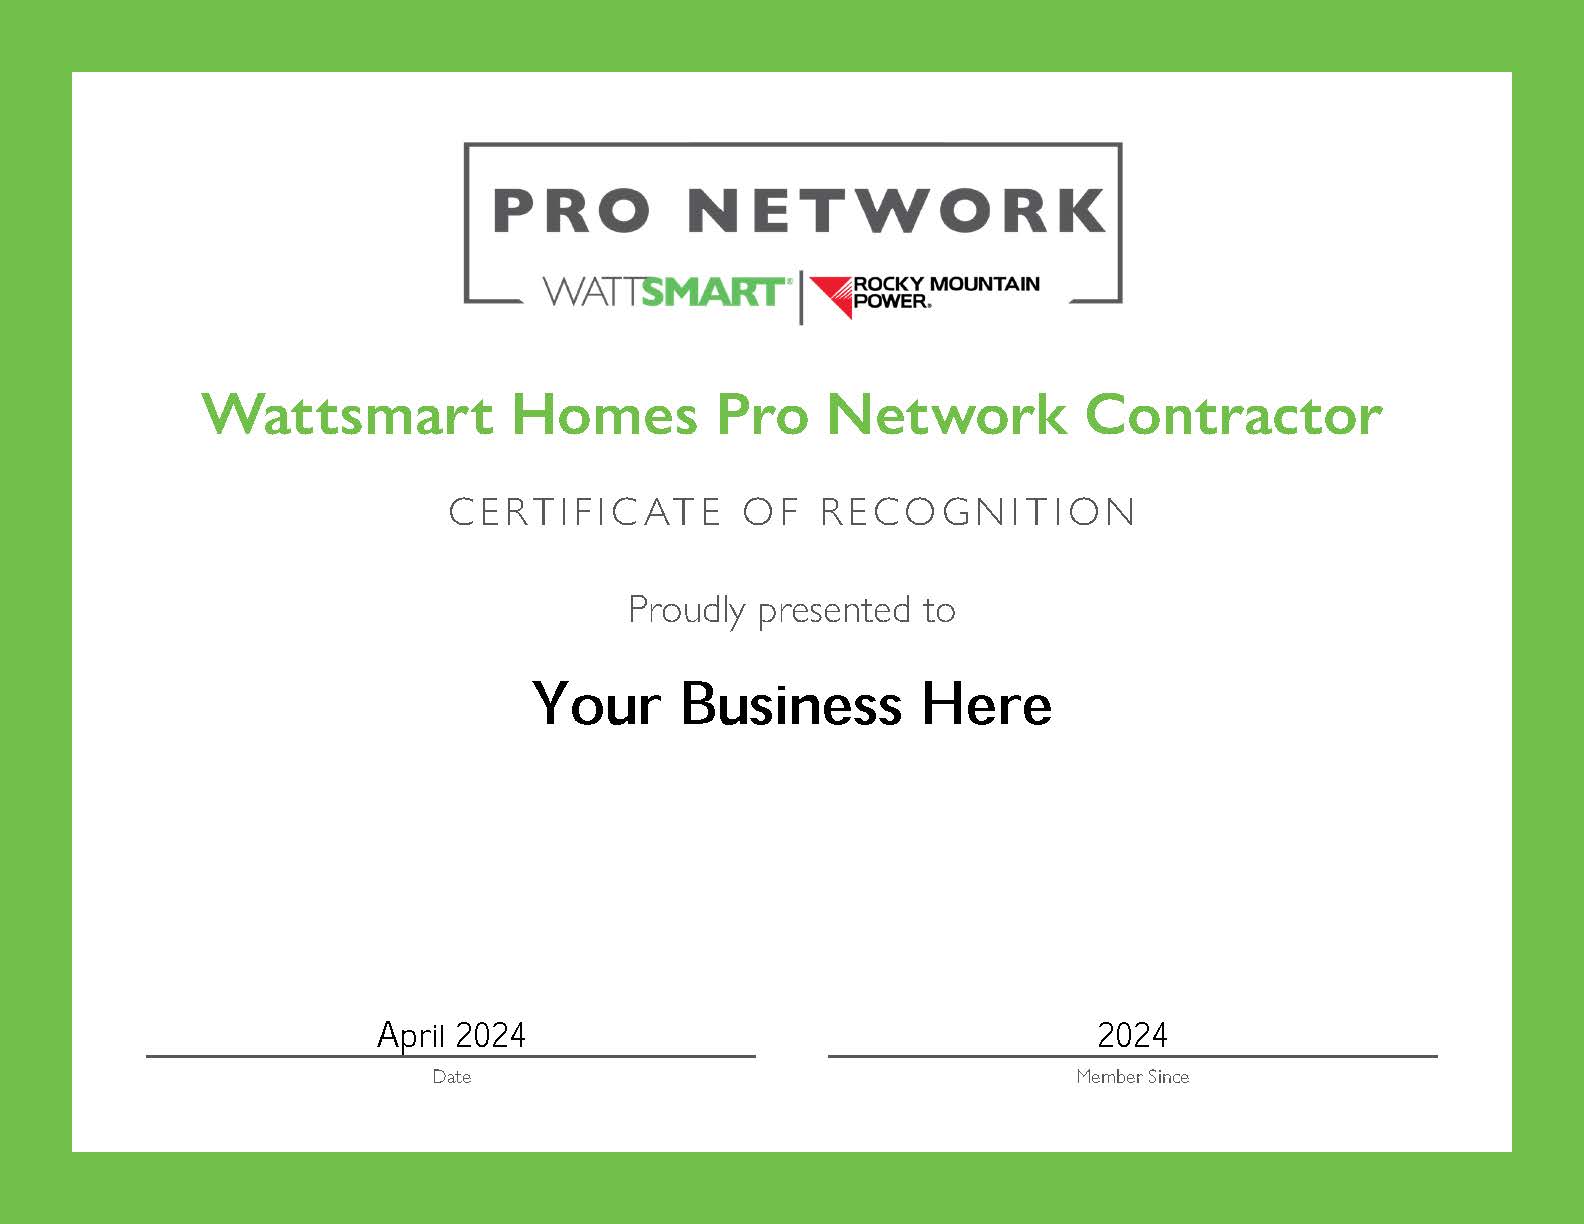 Pro Network certificate